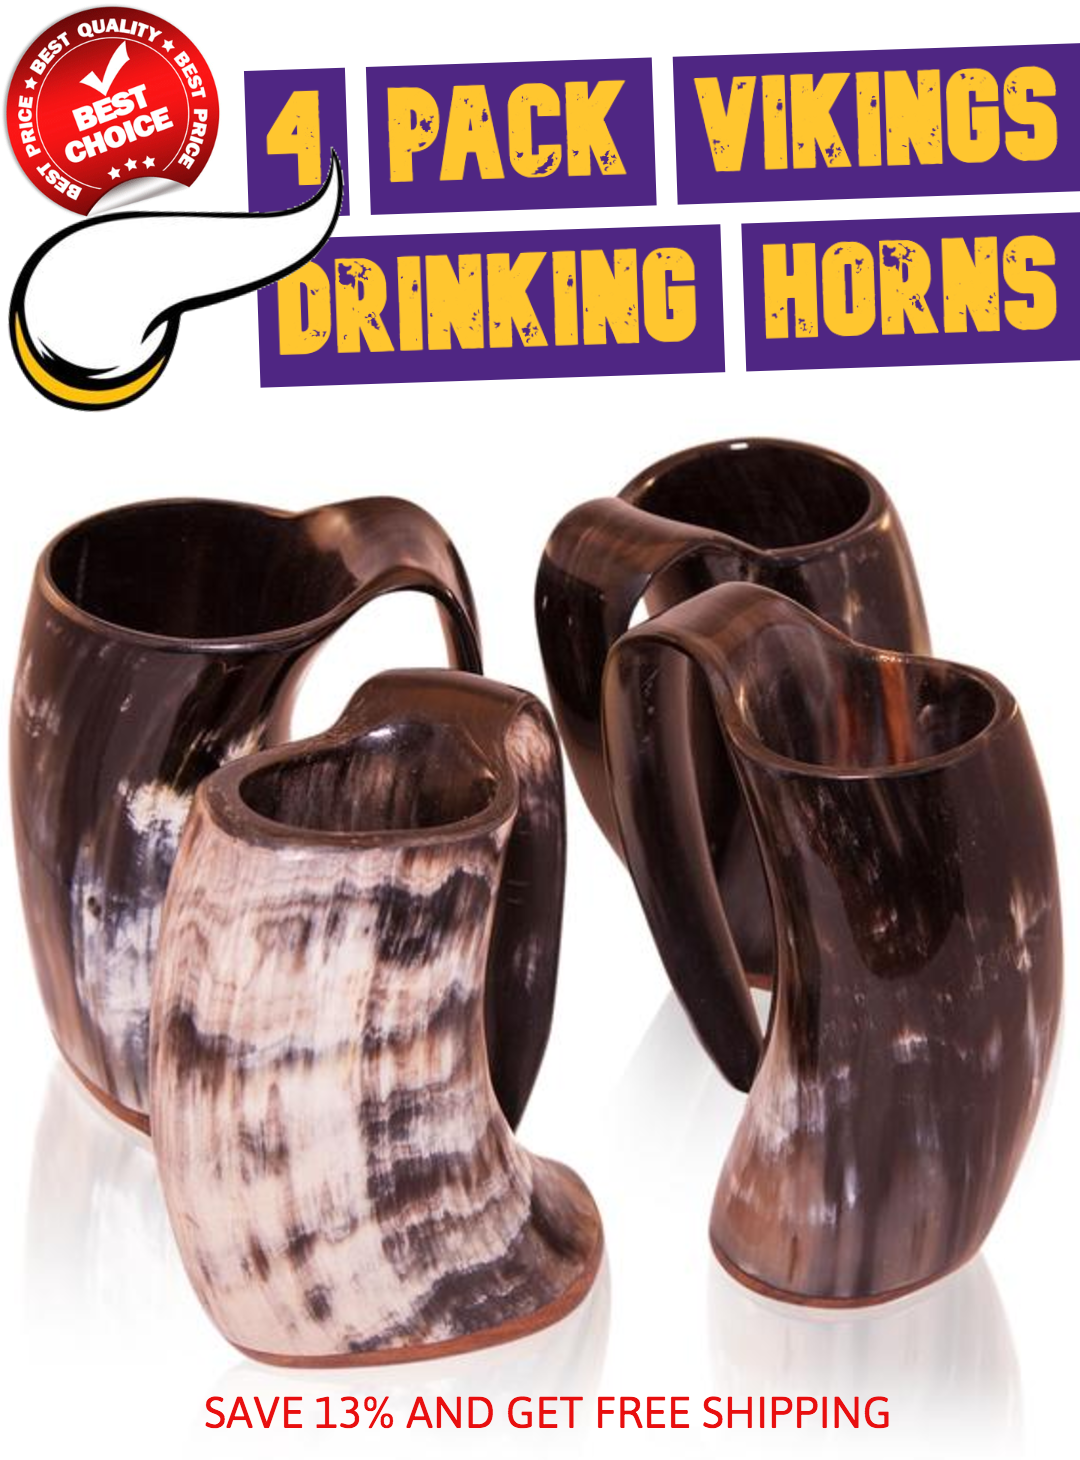 minnesota football viking horn drinking set. get the best real horn drinking horns for minnesota fans and vikings